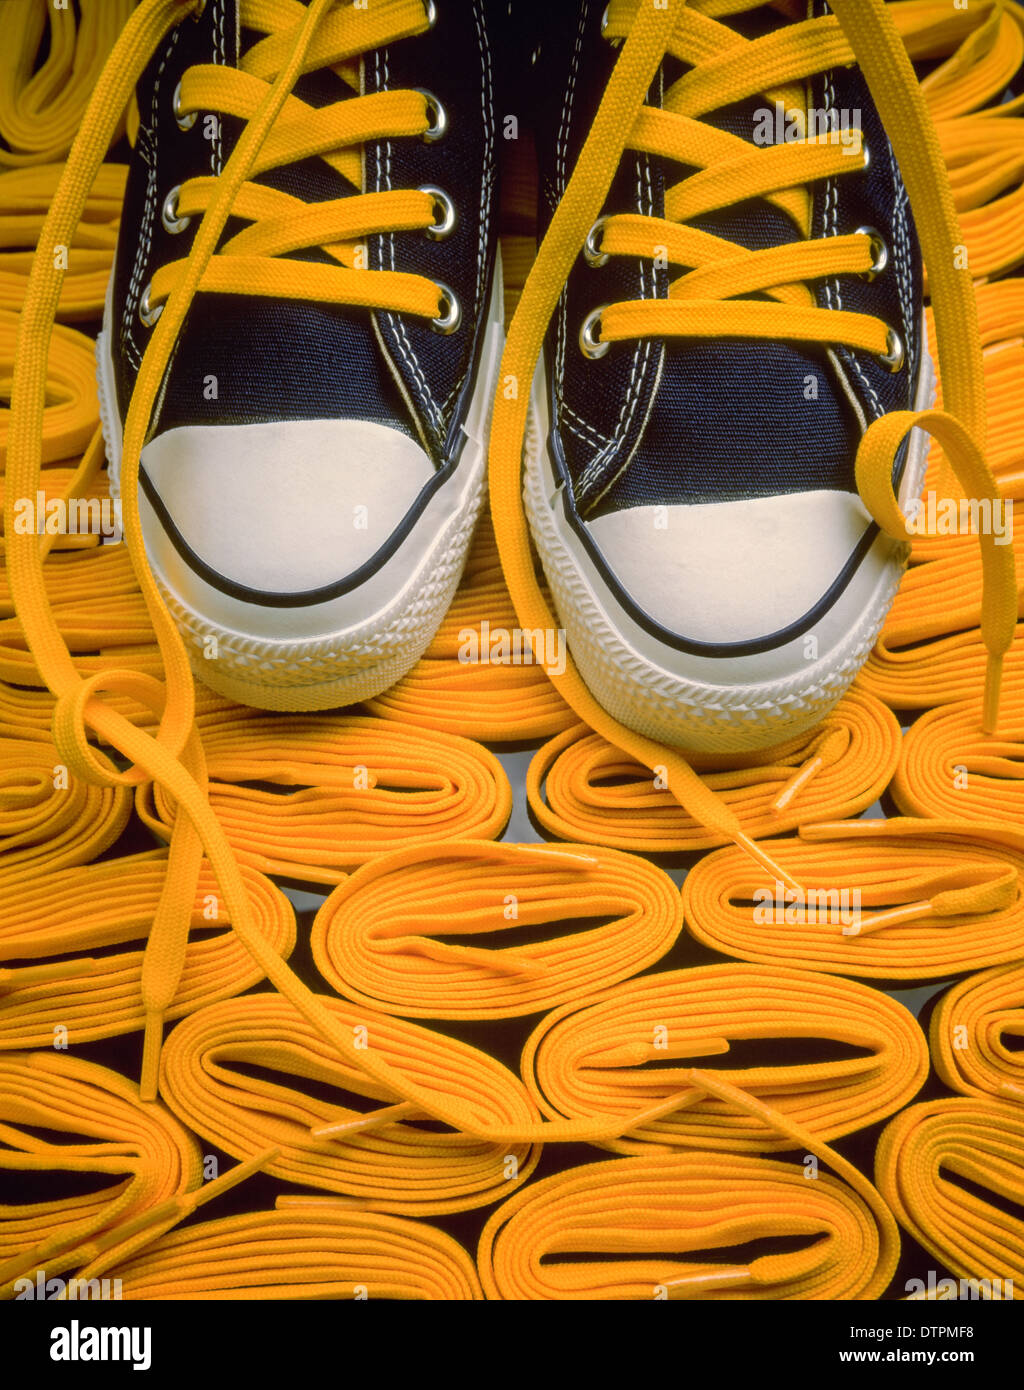 Gelbe Schnürsenkel mit blauen Converse "Chuck Taylor" sneakers  Stockfotografie - Alamy